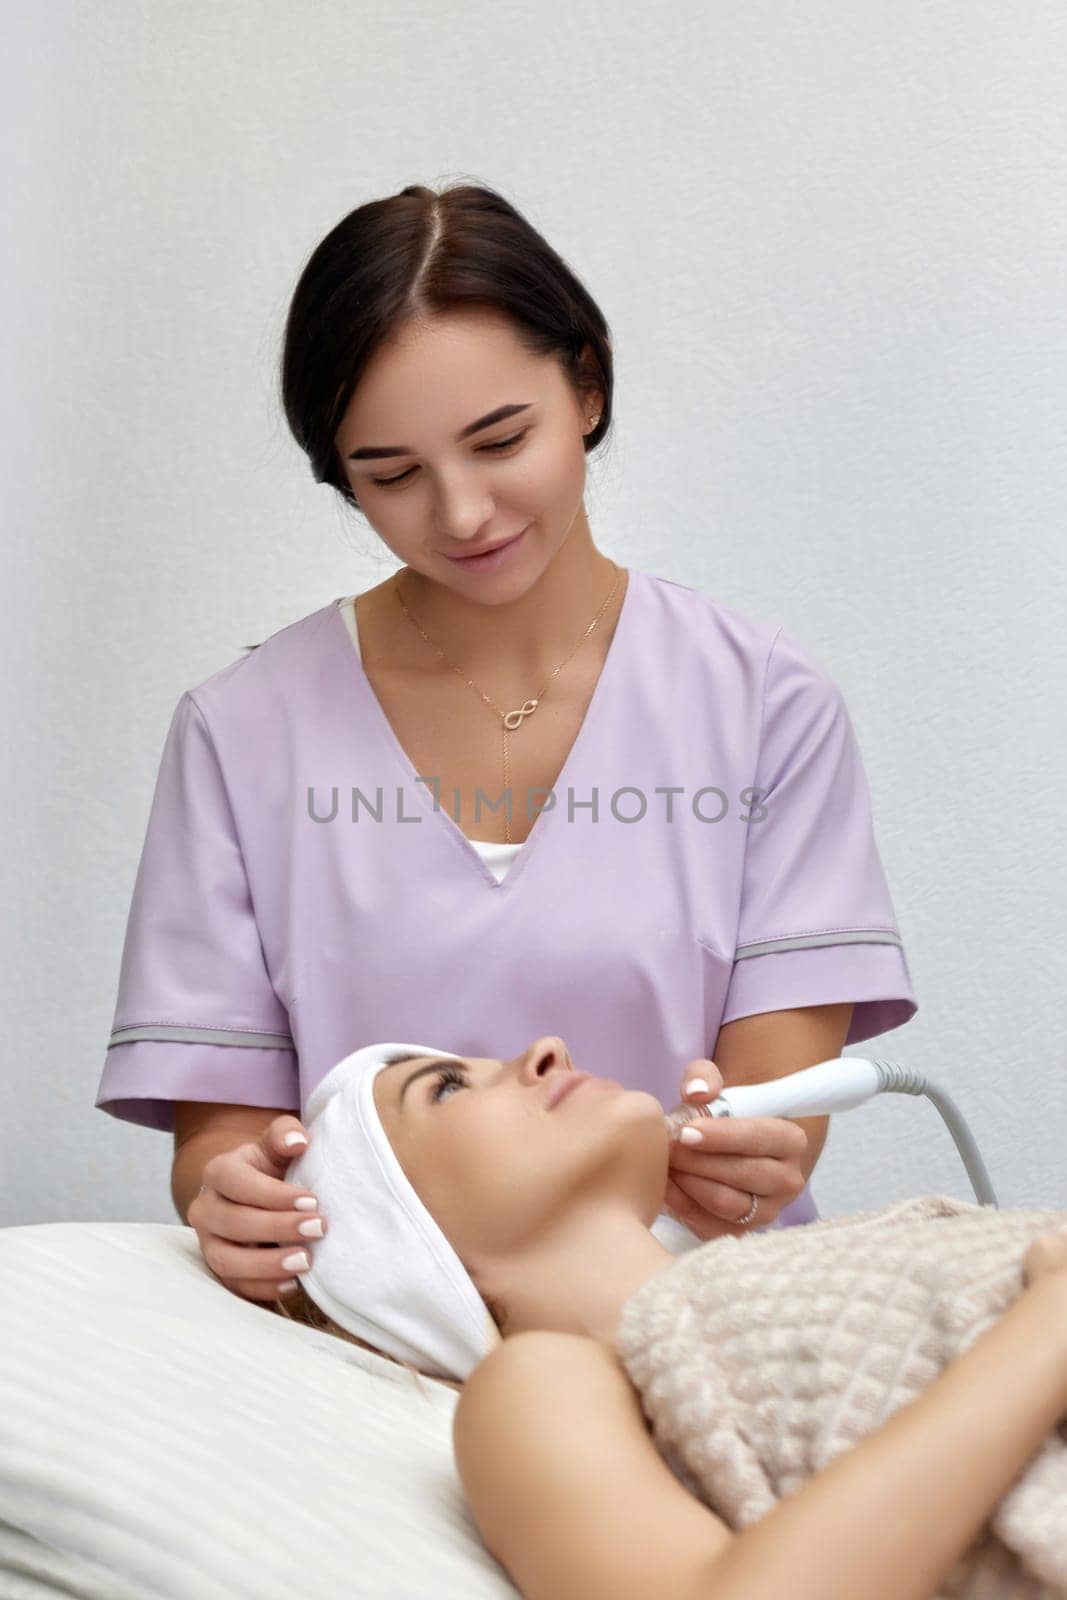 cosmetologist doing anti aging procedure in salon by erstudio